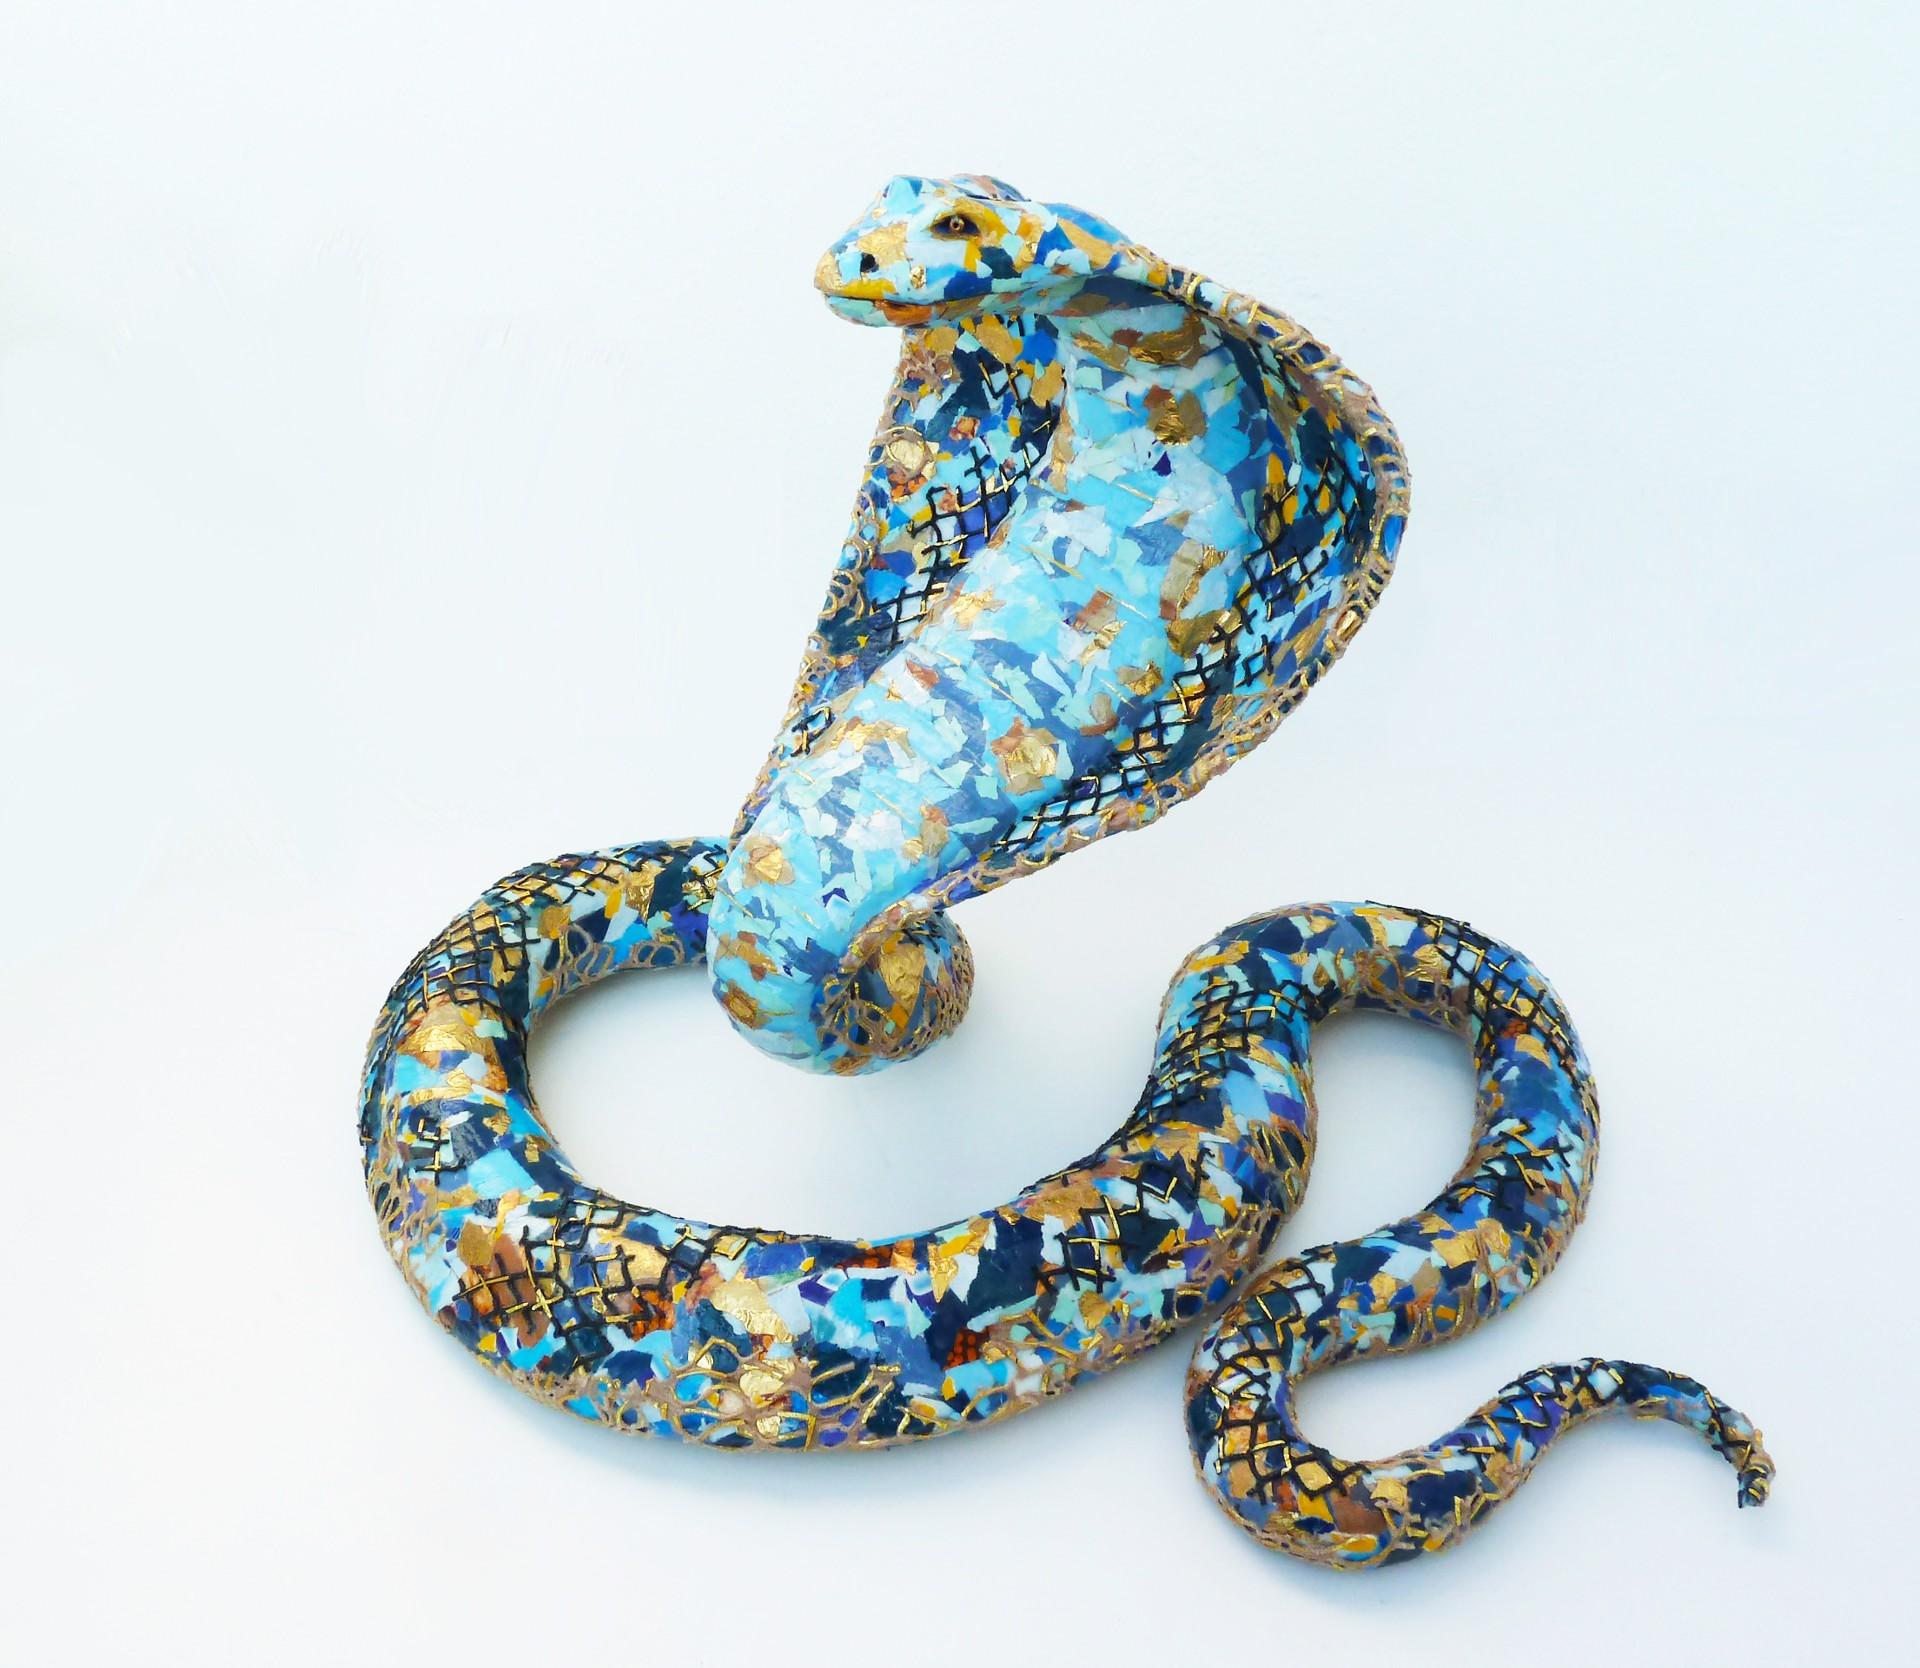 Kara le Cobra - Sculpture contemporaine de serpent Matériaux Upcylced  (bleu + or) - Mixed Media Art de Yulia Shtern